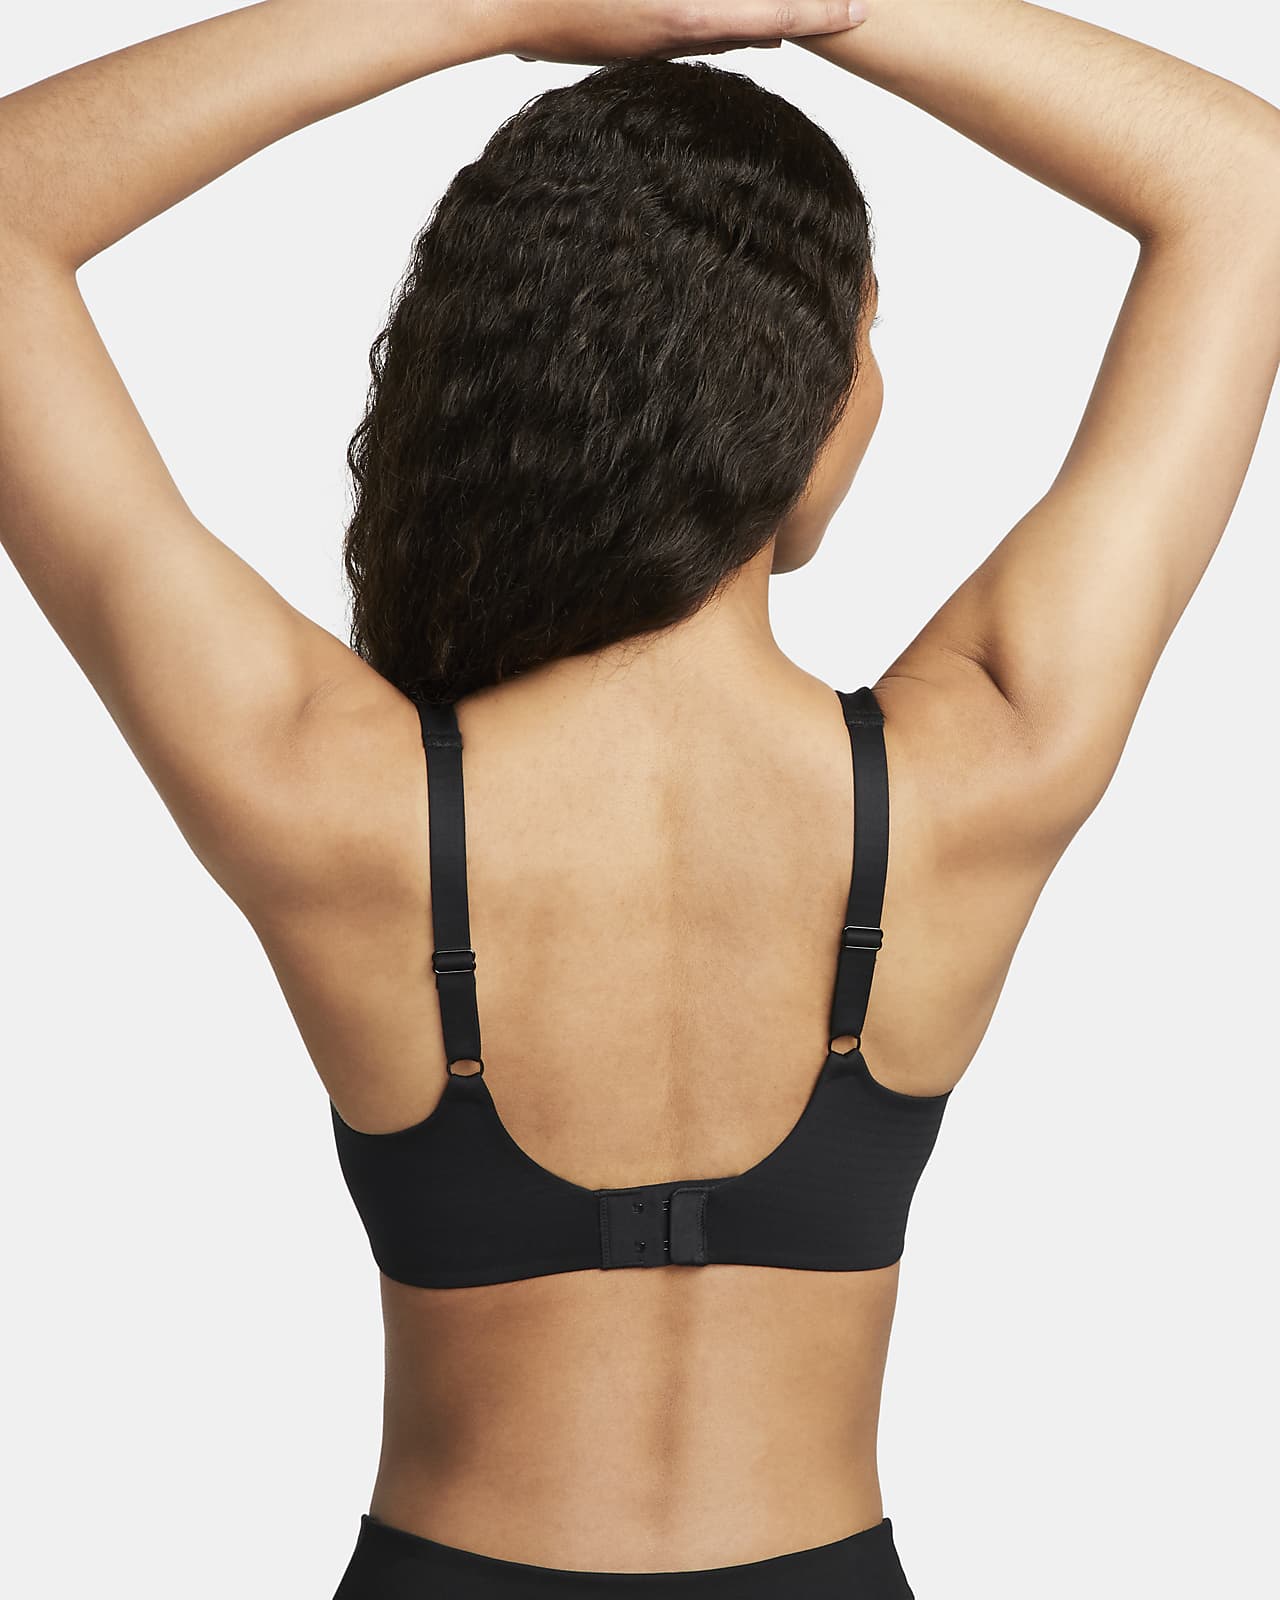 Nike Women's Motion Adapt Neon Stud High Support Sports Bra (Black, Medium)